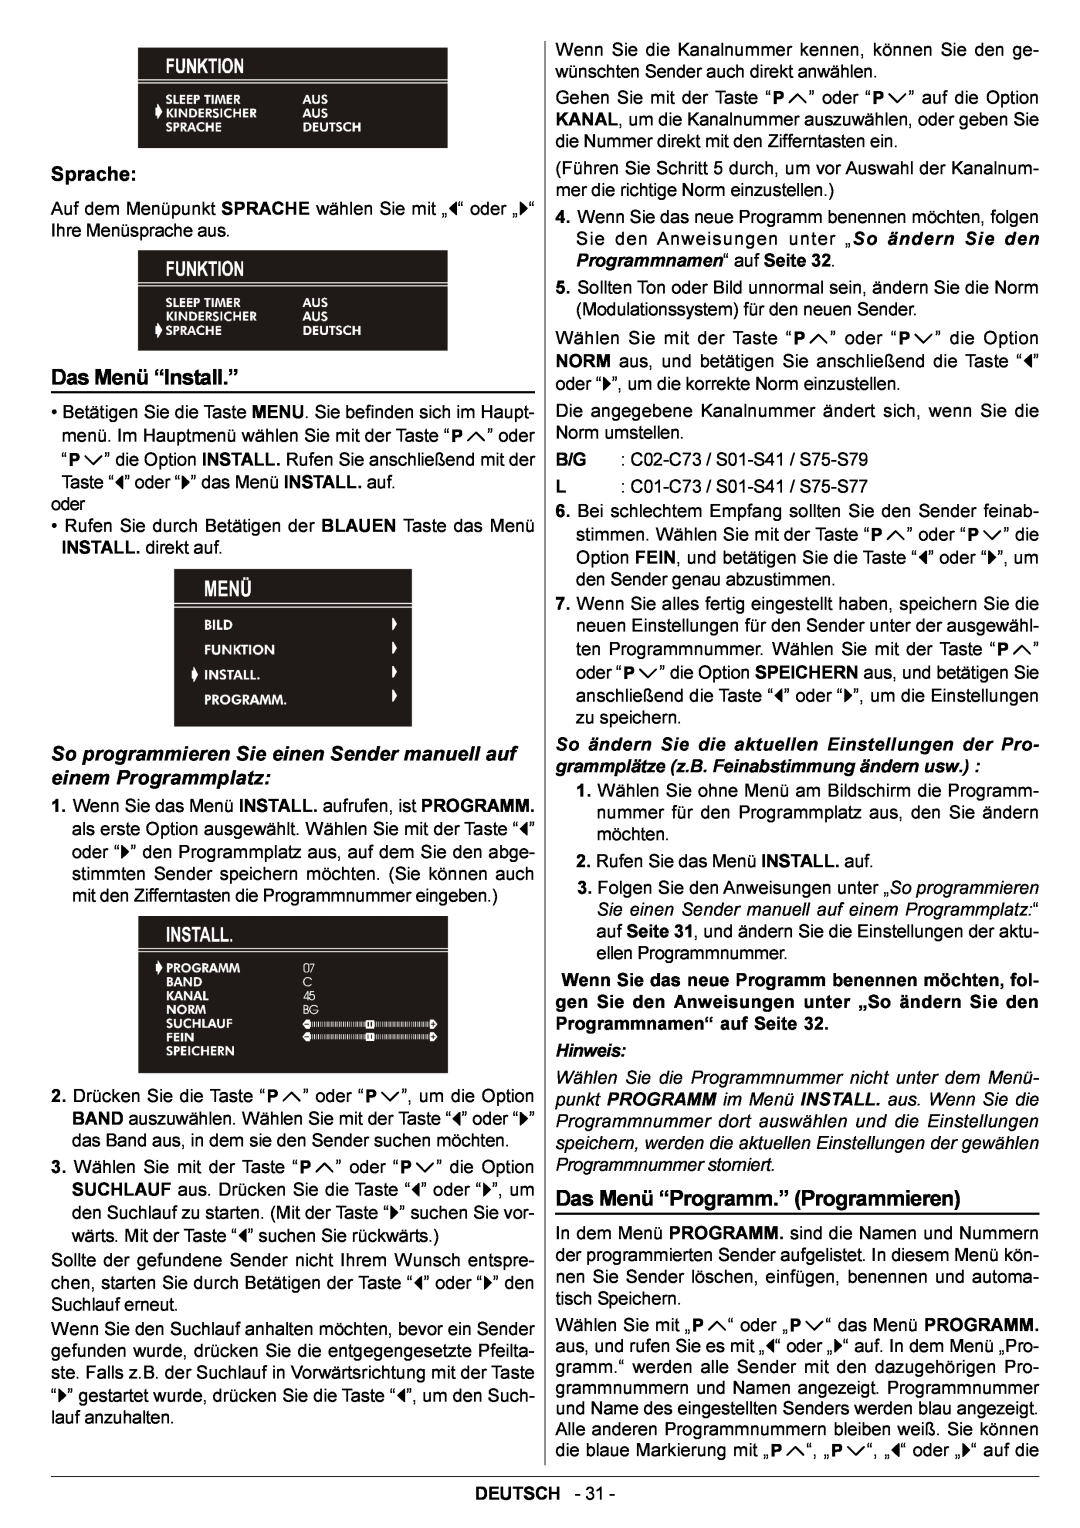 JVC AV14BJ8EPS manual Das Menü “Install.”, Das Menü “Programm.” Programmieren, Sprache, Hinweis 